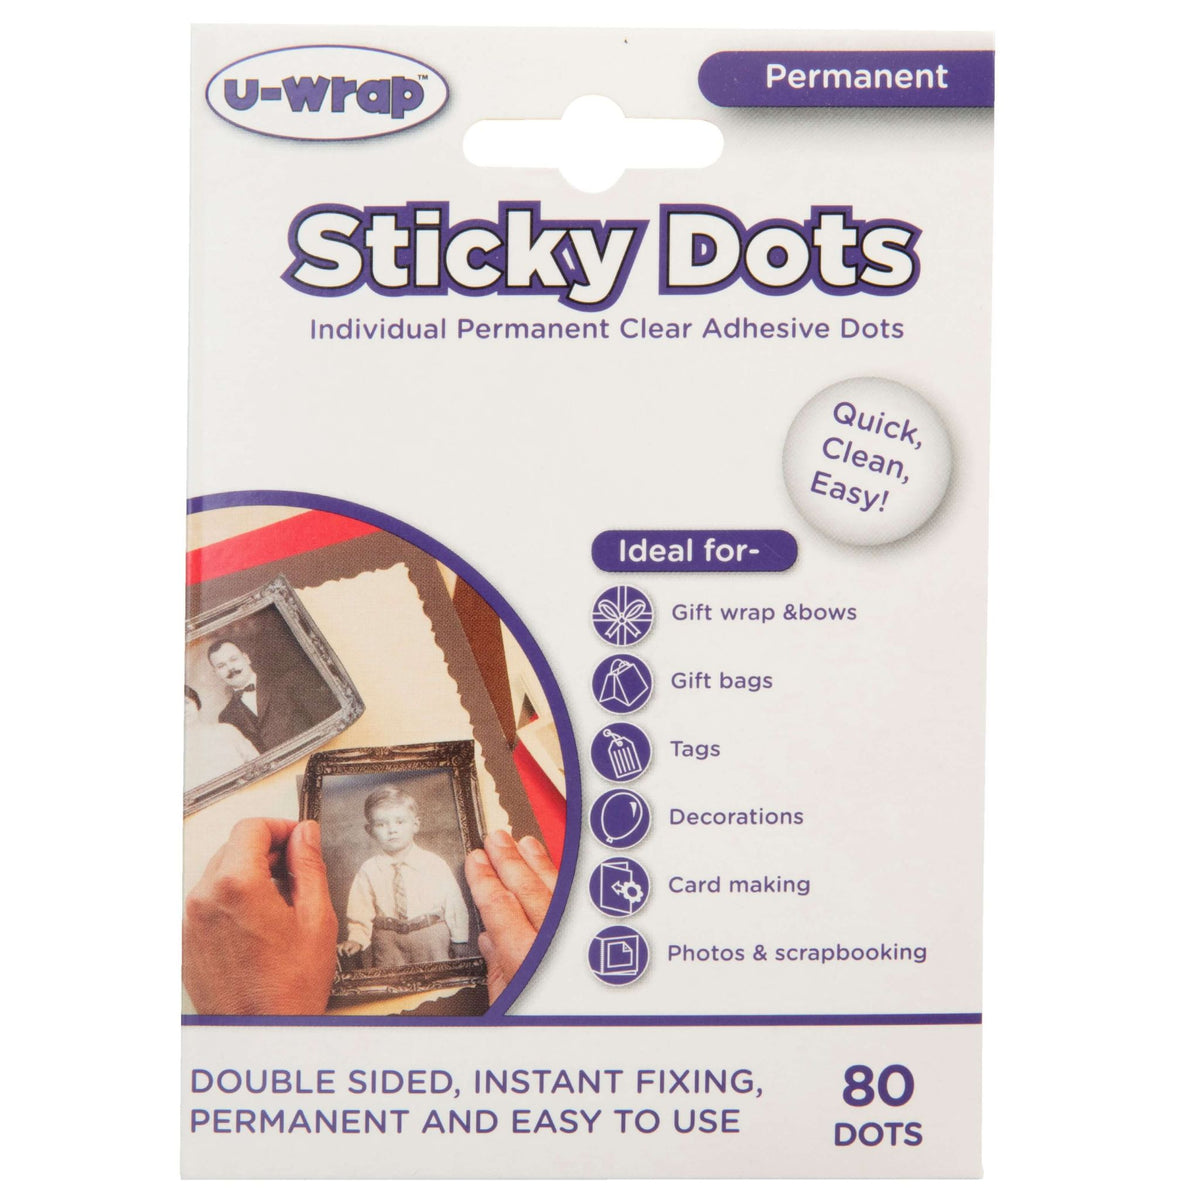 U-Wrap Permanent Adhesive Dots Pack of 80